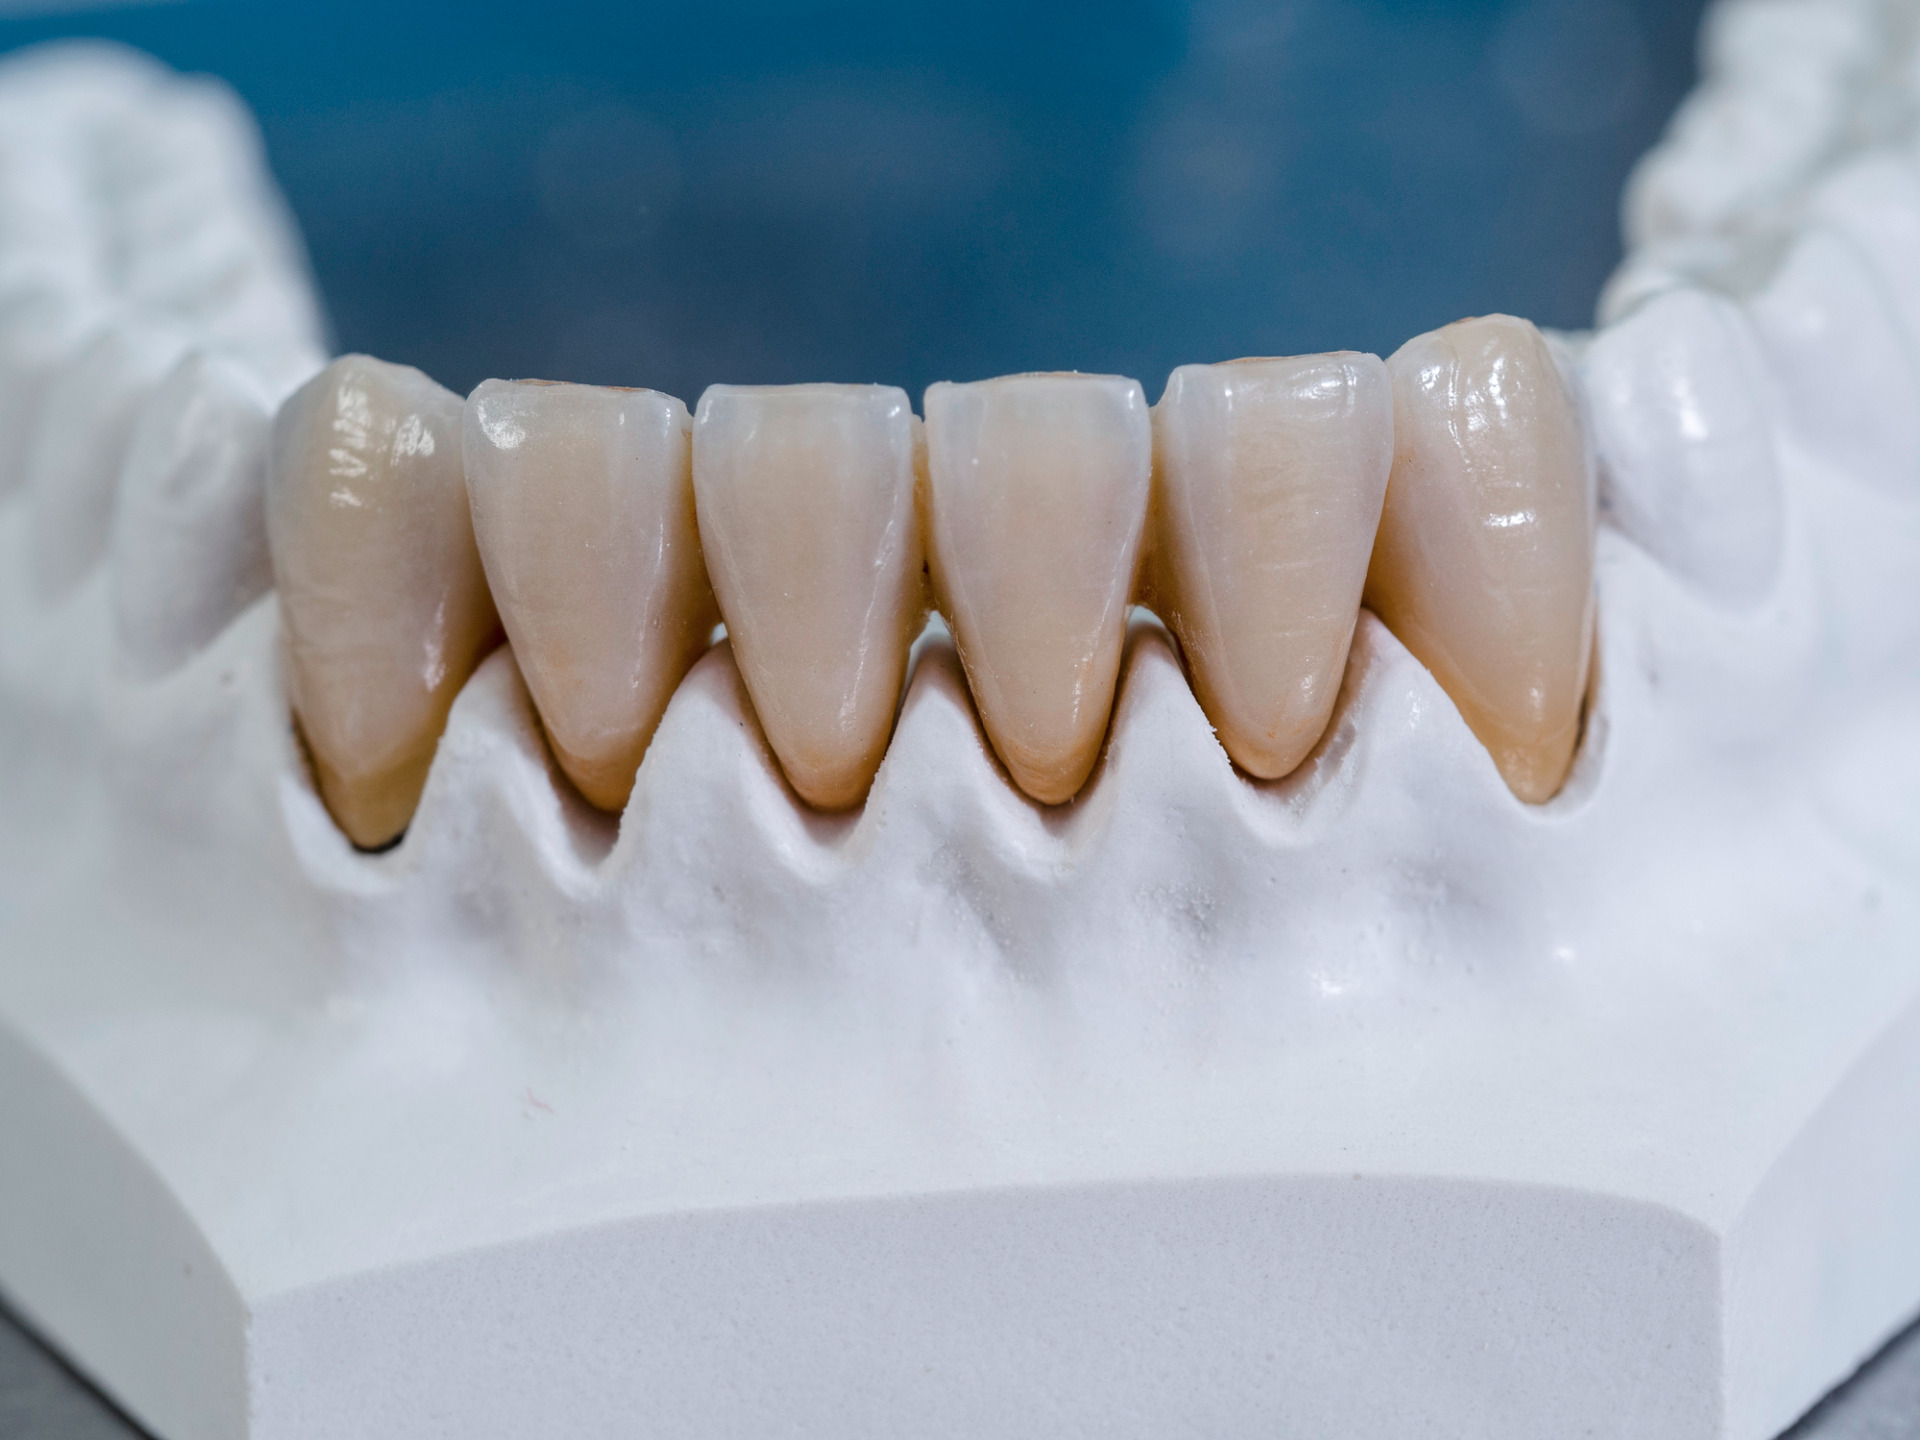 GC Gradia dental crowns, DC Gradia dental bridges